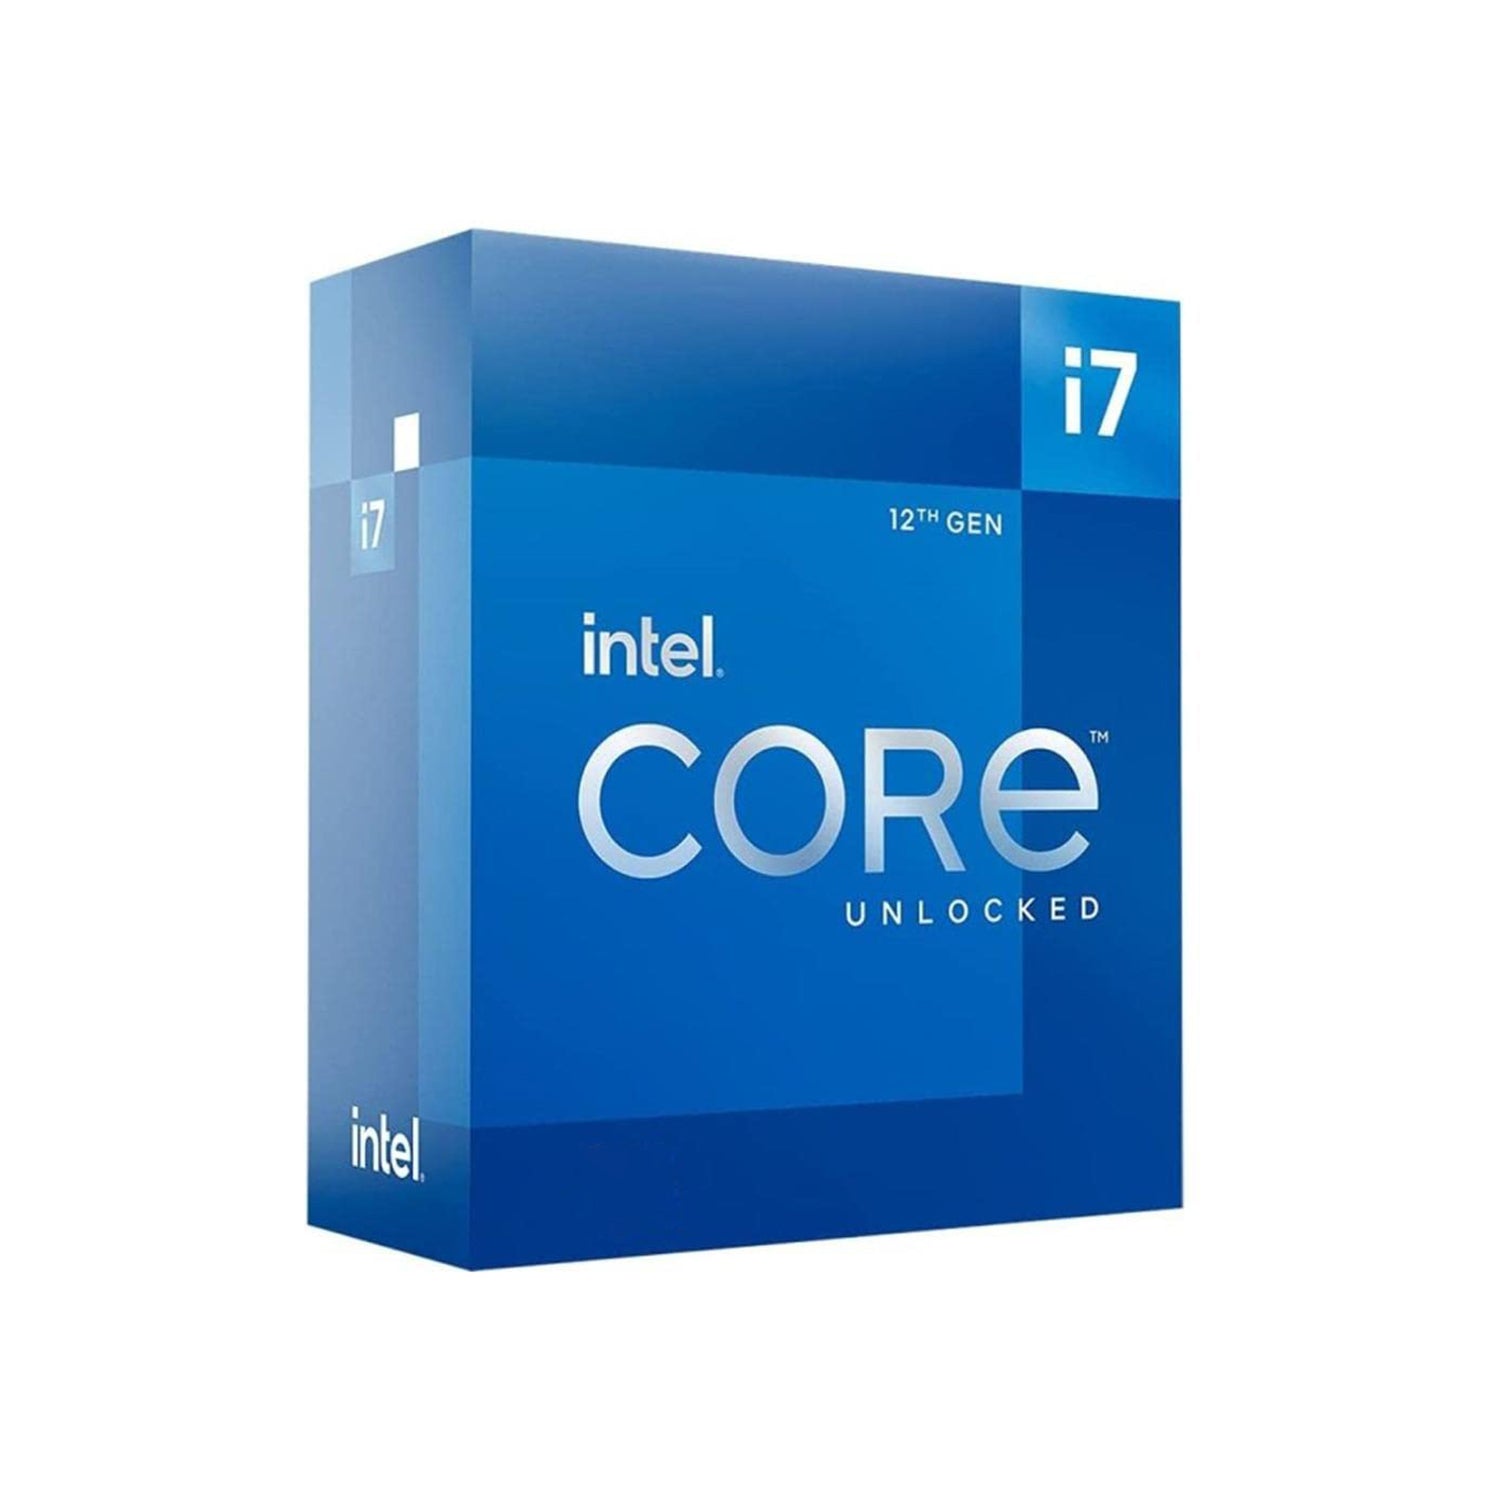 Intel Core i7-12700K Processor - Core i7 12th Gen Alder Lake 12-Core up to 5.0 GHz LGA 1700, 25 MB Intel Smart Cache, 125W Desktop Processor - BX8071512700K